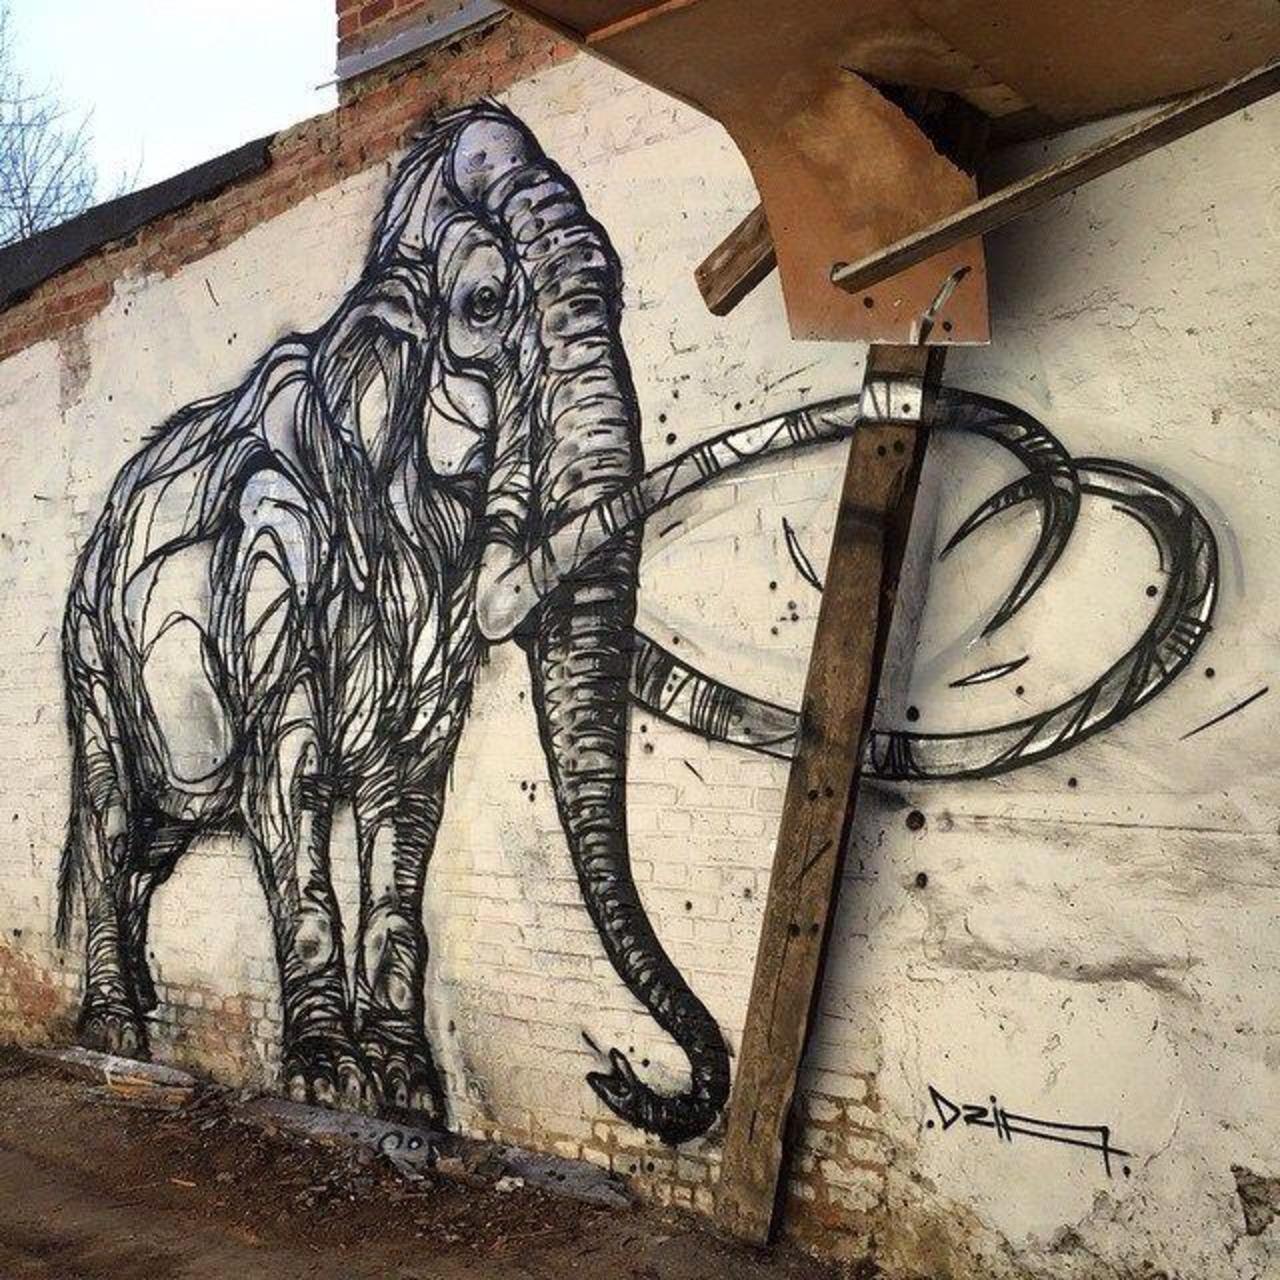 Mammoth. New nature in Street Art wall by DZIA 

#art #graffiti #mural #streetart http://t.co/O6tBp0zSQK